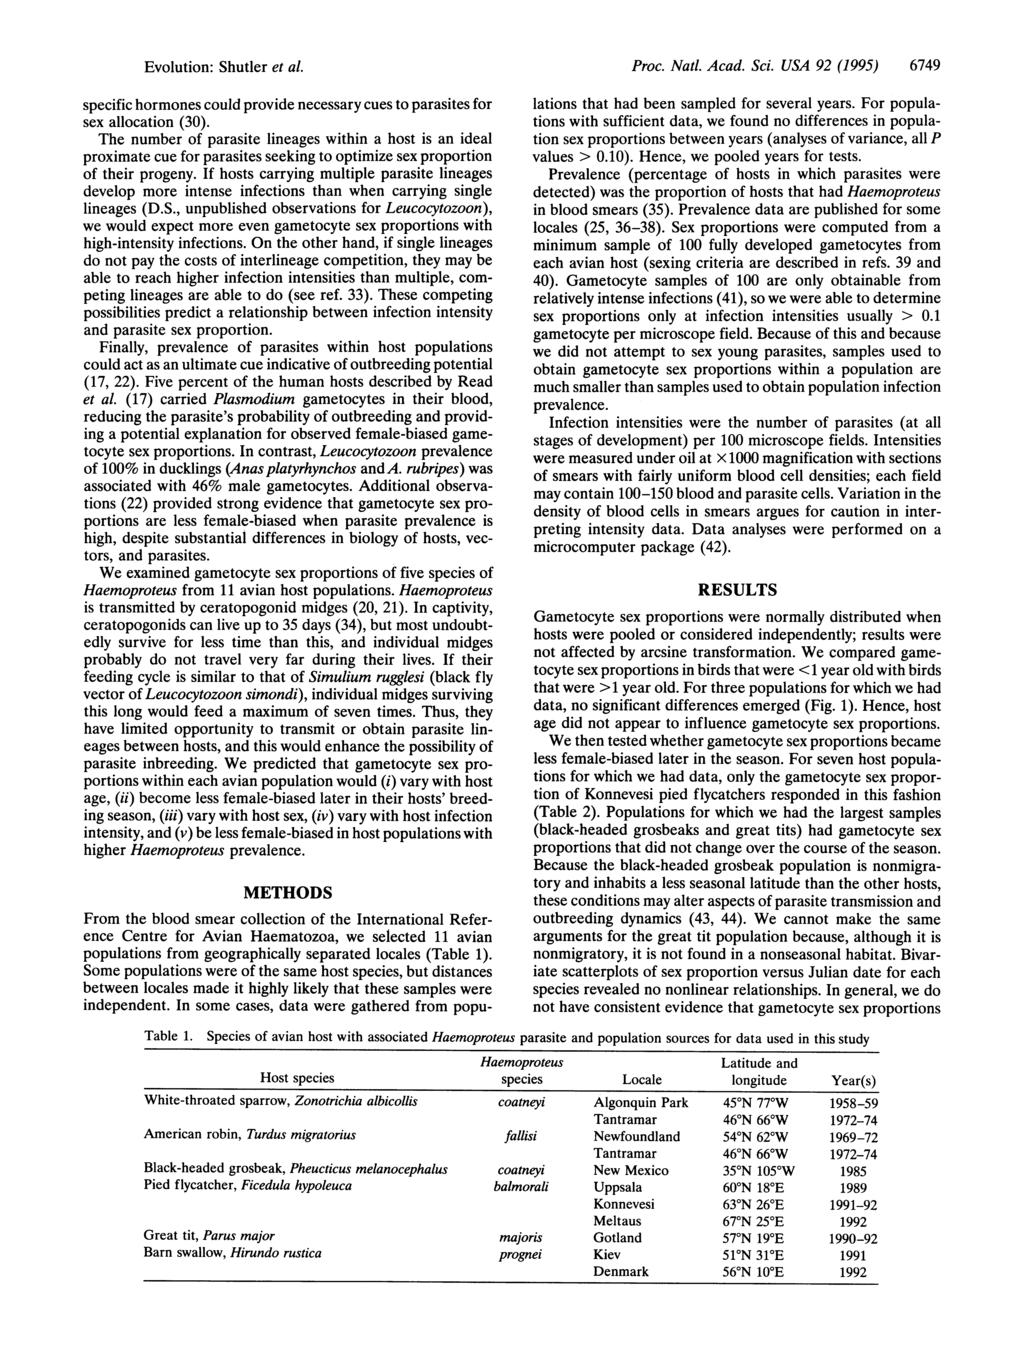 Evolution: Shutler et al. Proc. Natl. Acad. Sci. USA 92 (1995) 6749 specific hormones could provide necessary cues to parasites for sex allocation (30).